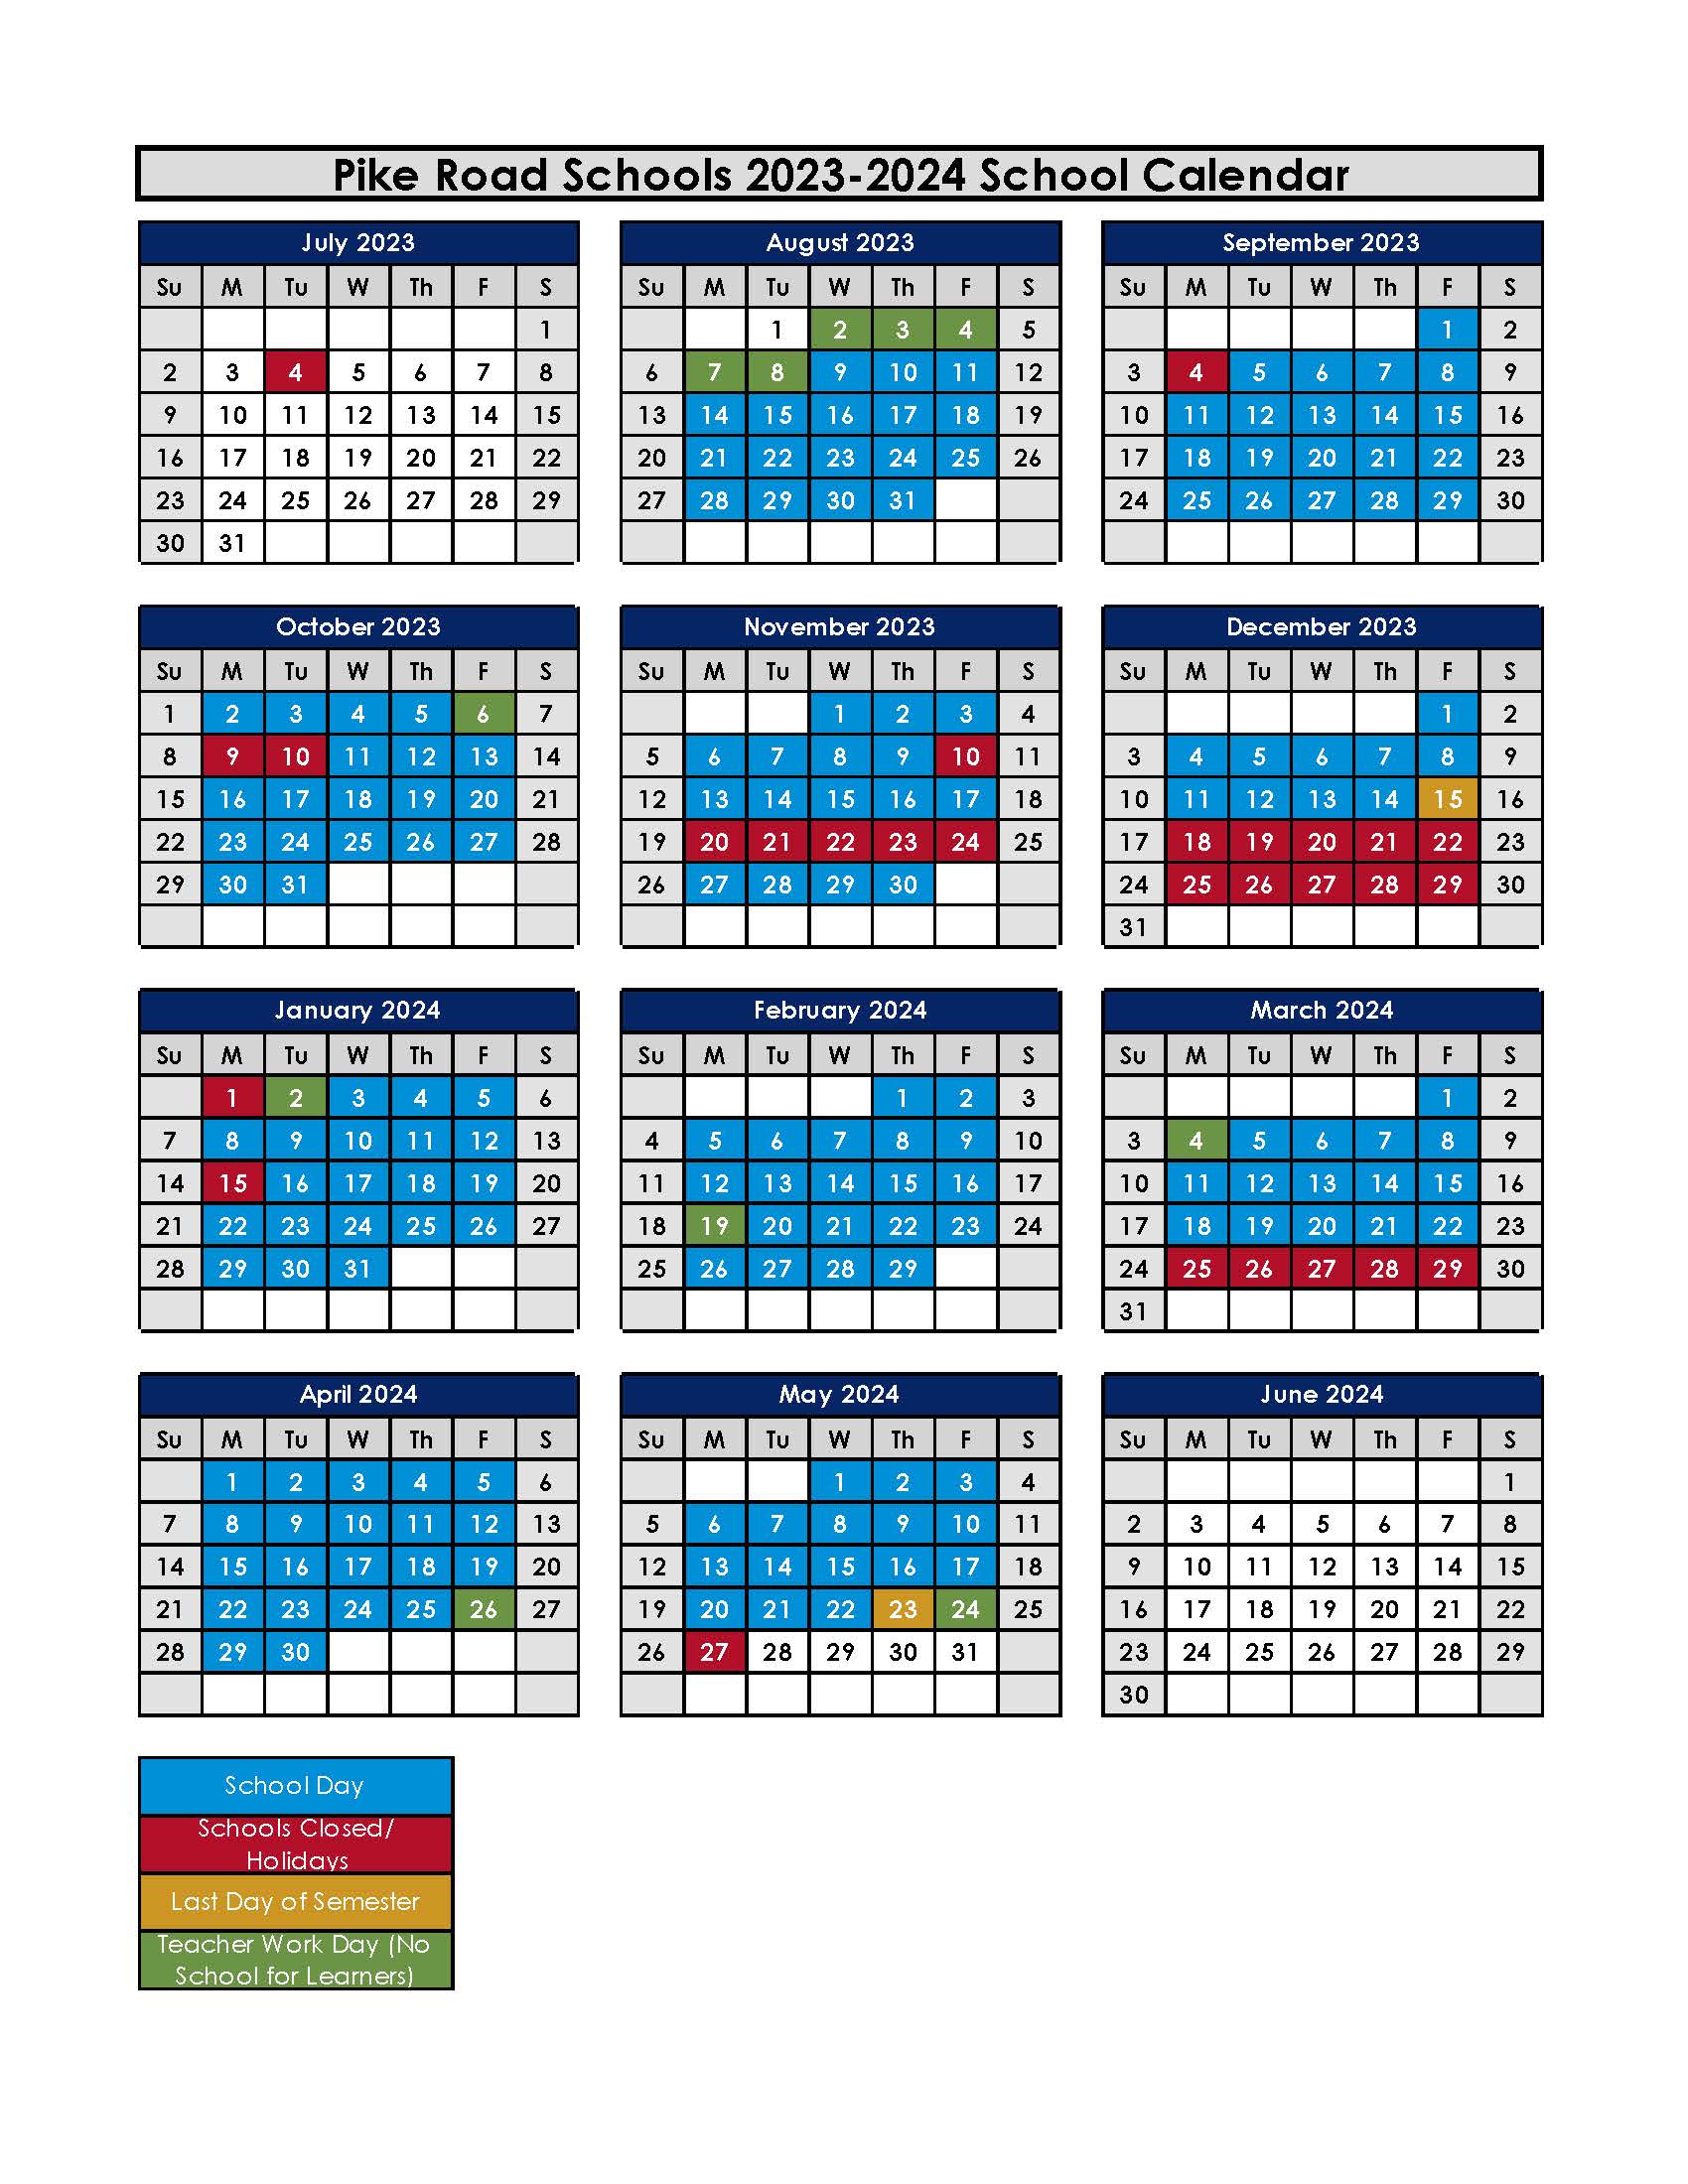 Pike Road Schools Calendar 2022 and 2023 - PublicHolidays.com